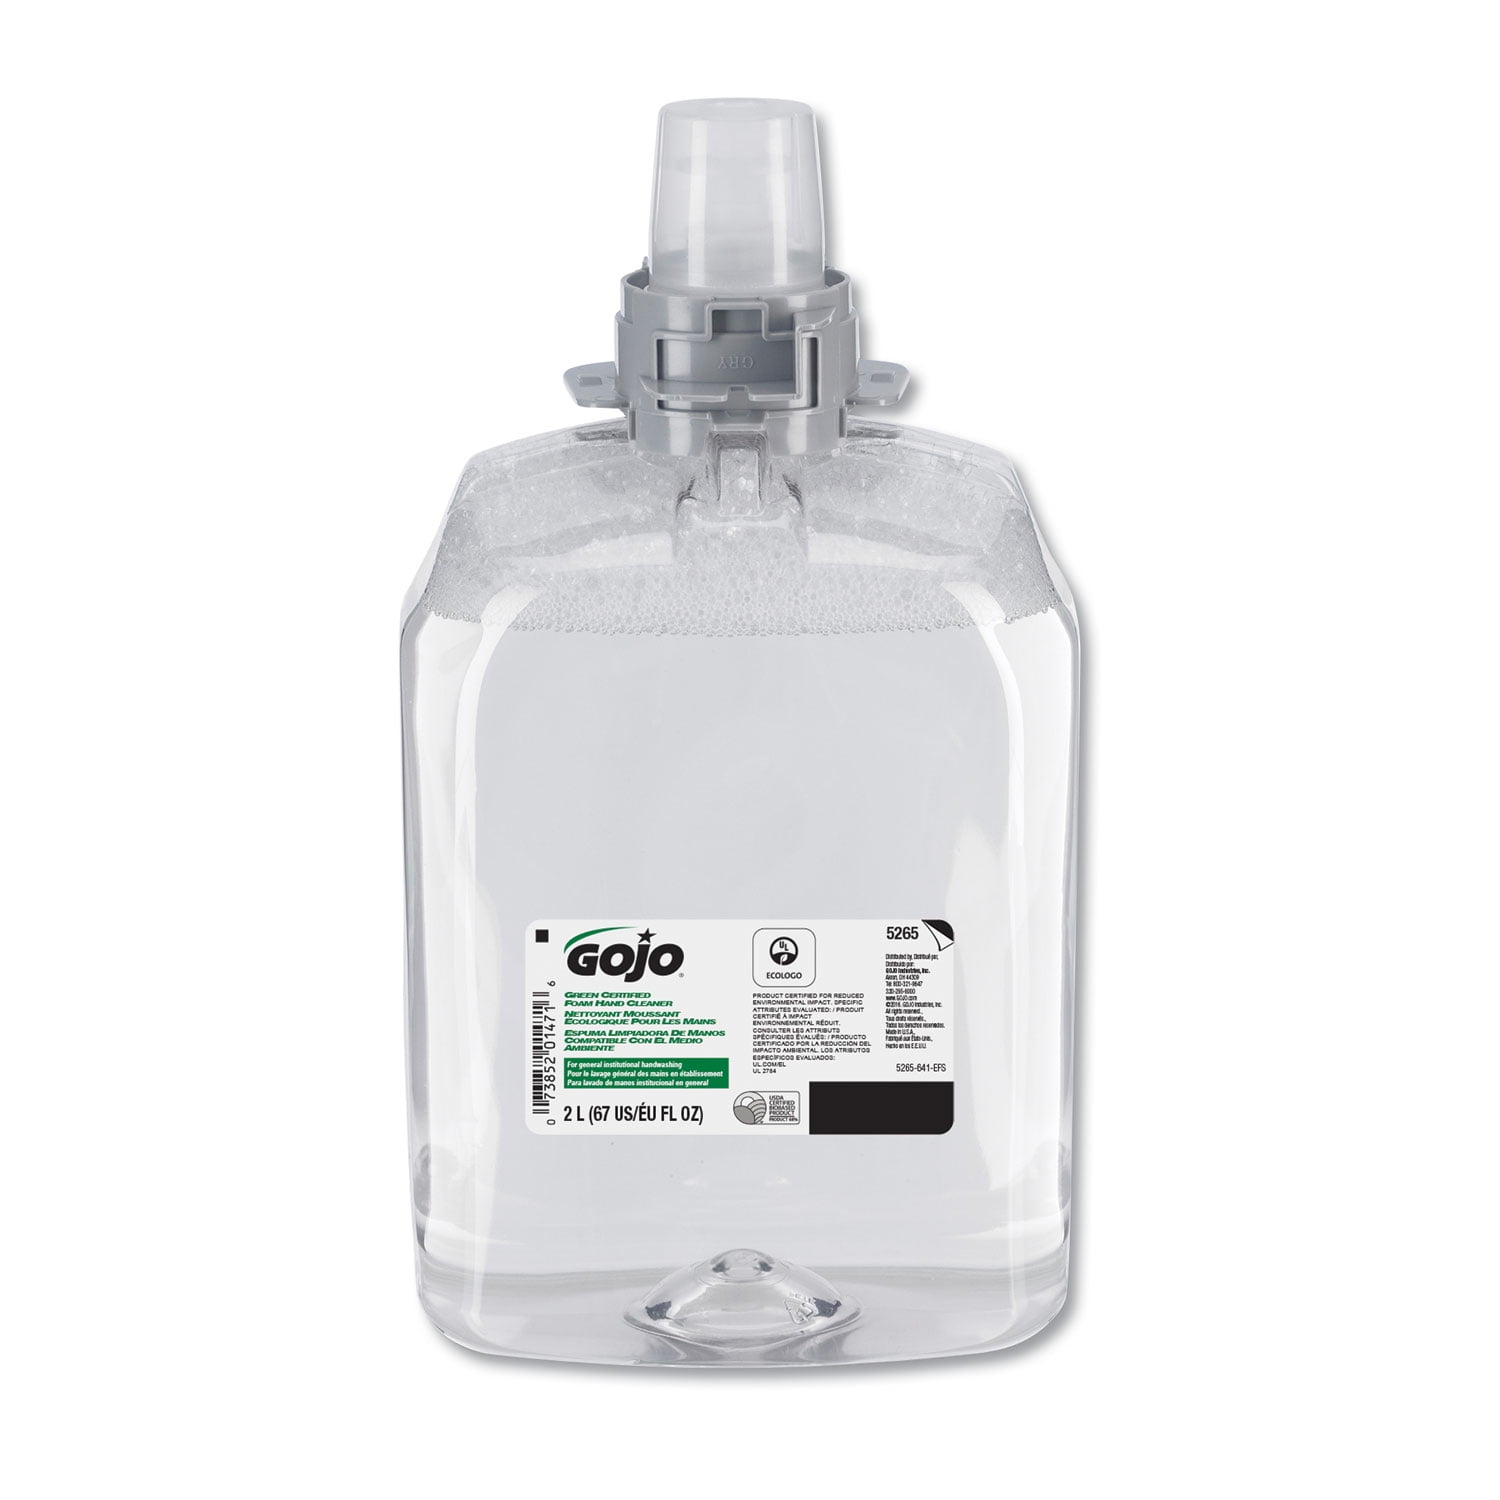 Gojo Green Certified Foam Hand Cleaner - 2 pack, 2000 ml Refill